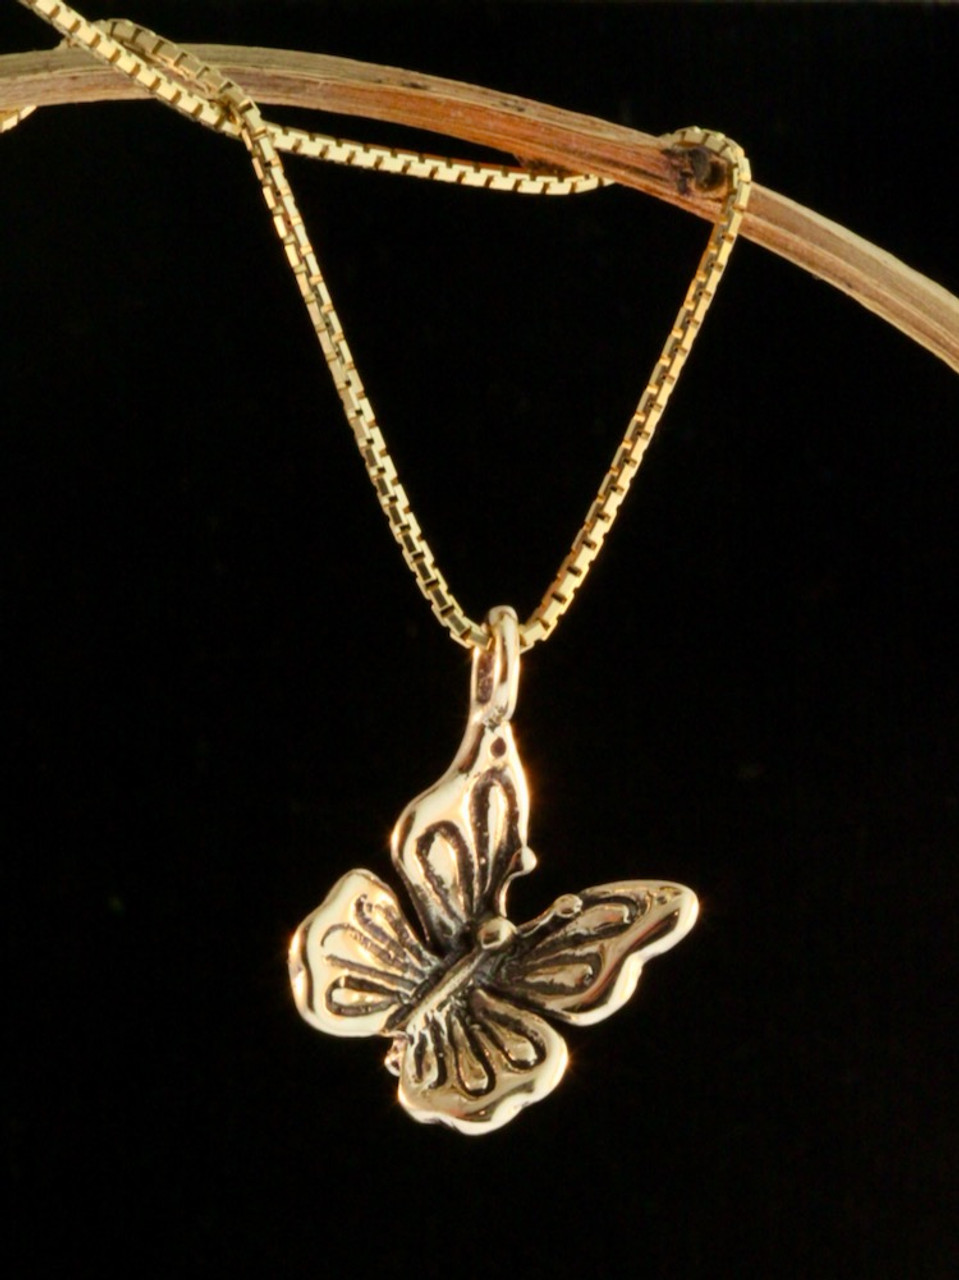 Metamorphosis - Butterfly Charm Jewelry